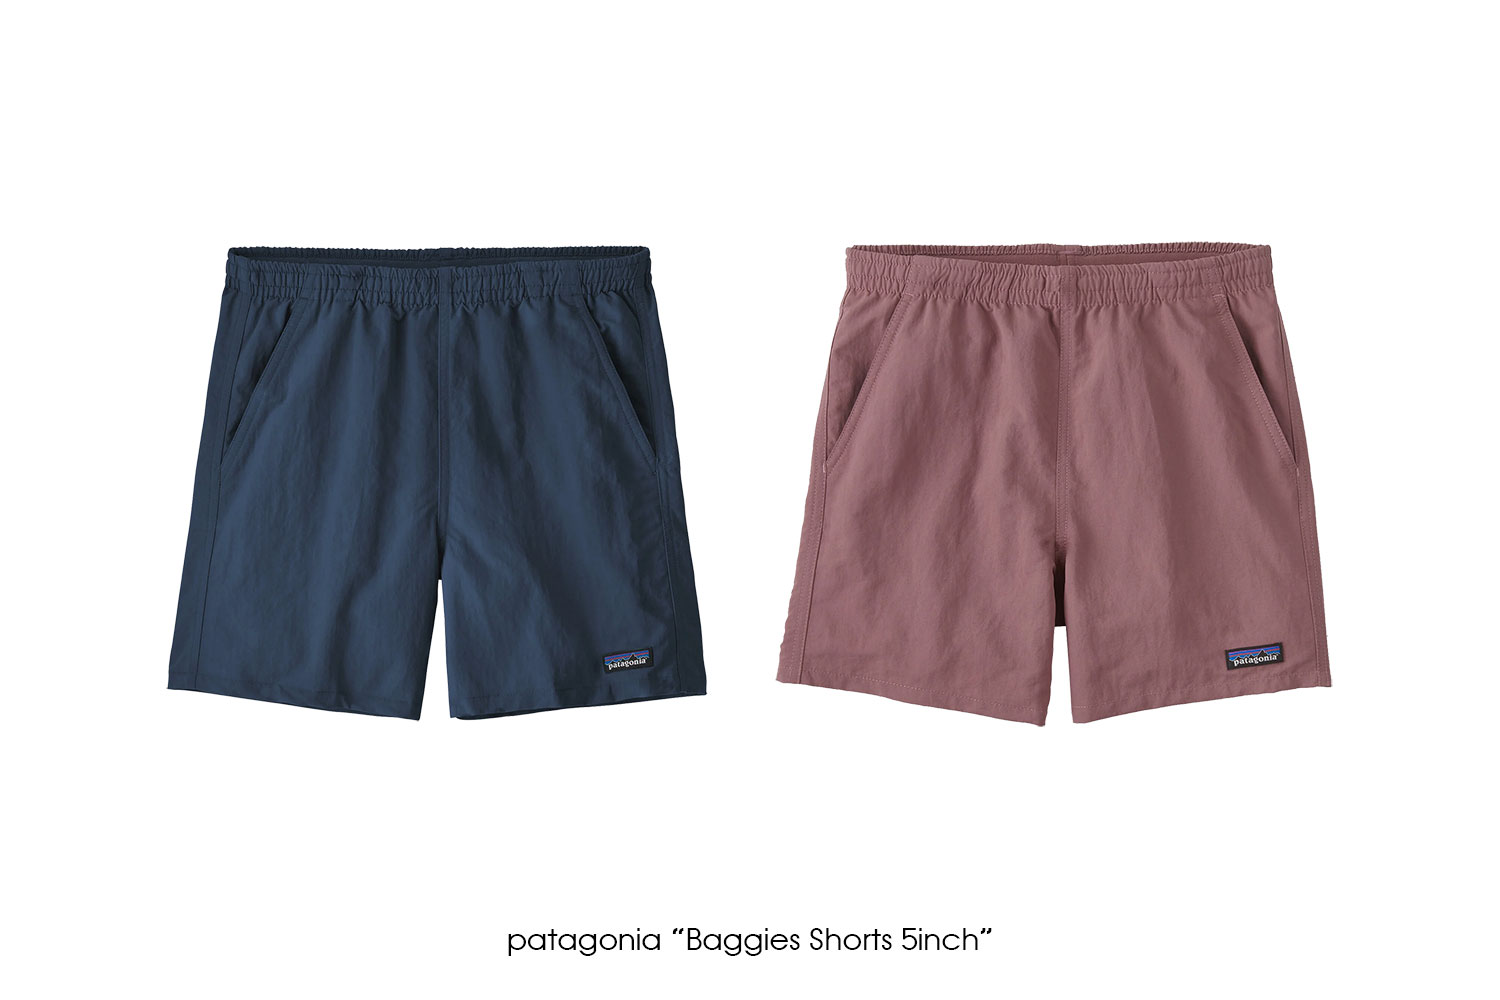 patagonia Baggies Shorts